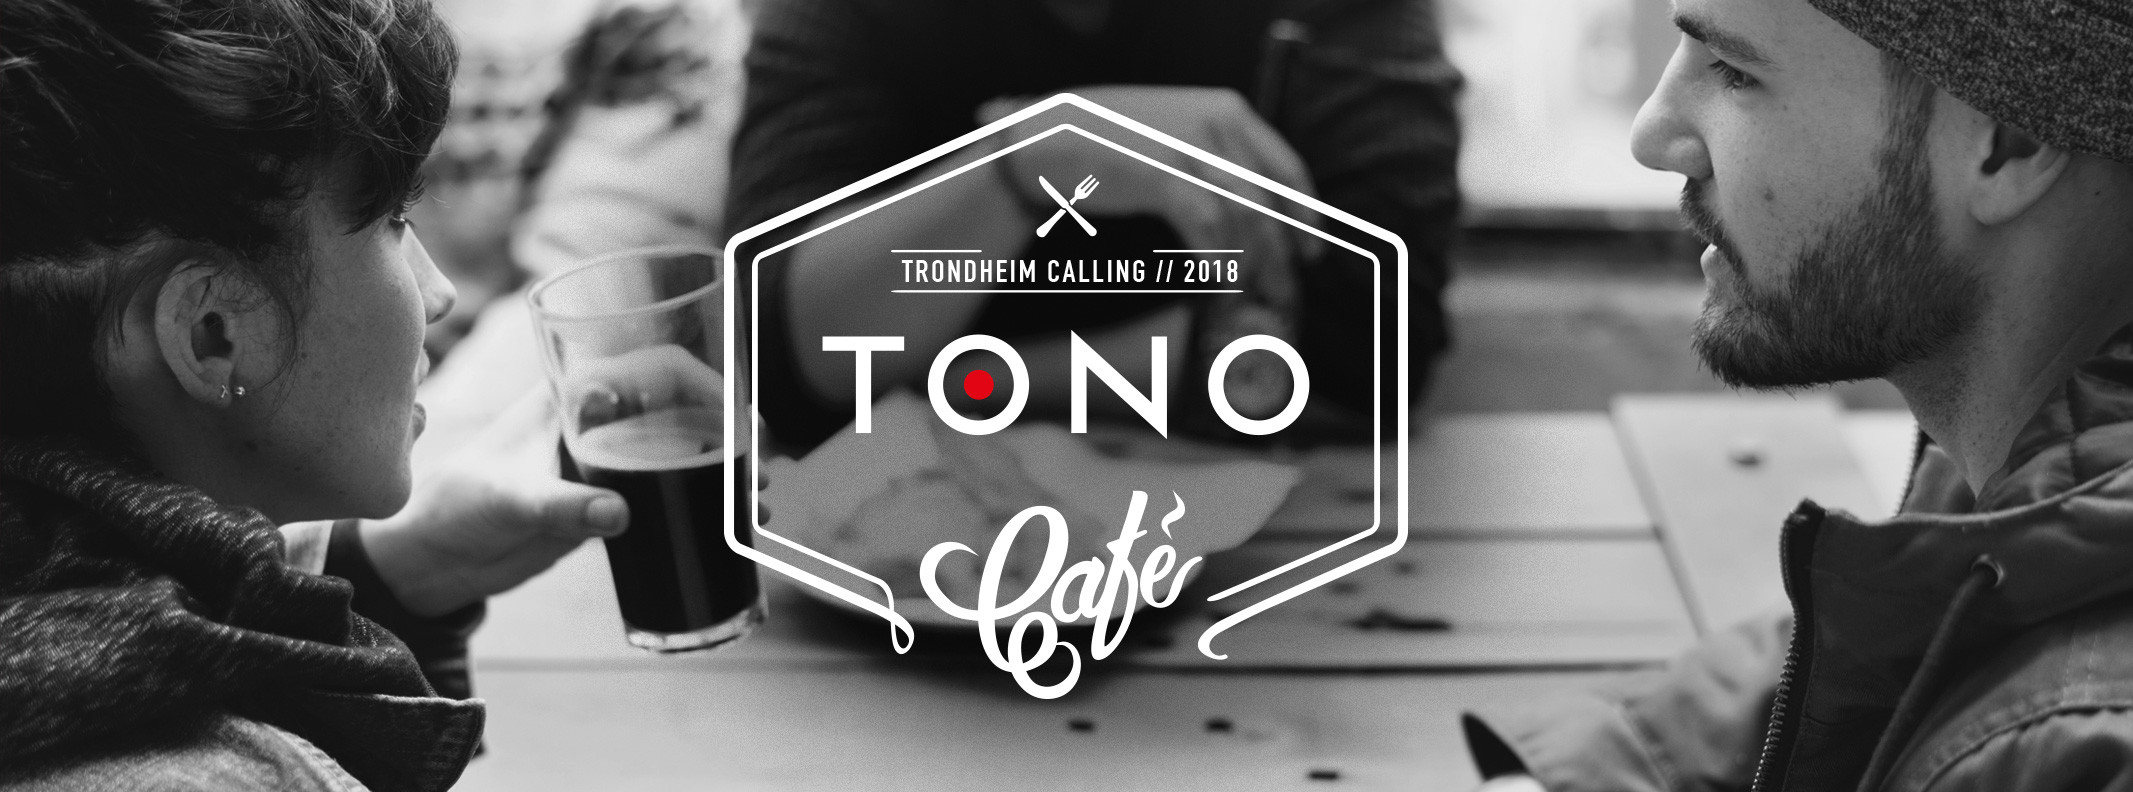 TONO_Cafe_TC2018_2133x792_arrangement